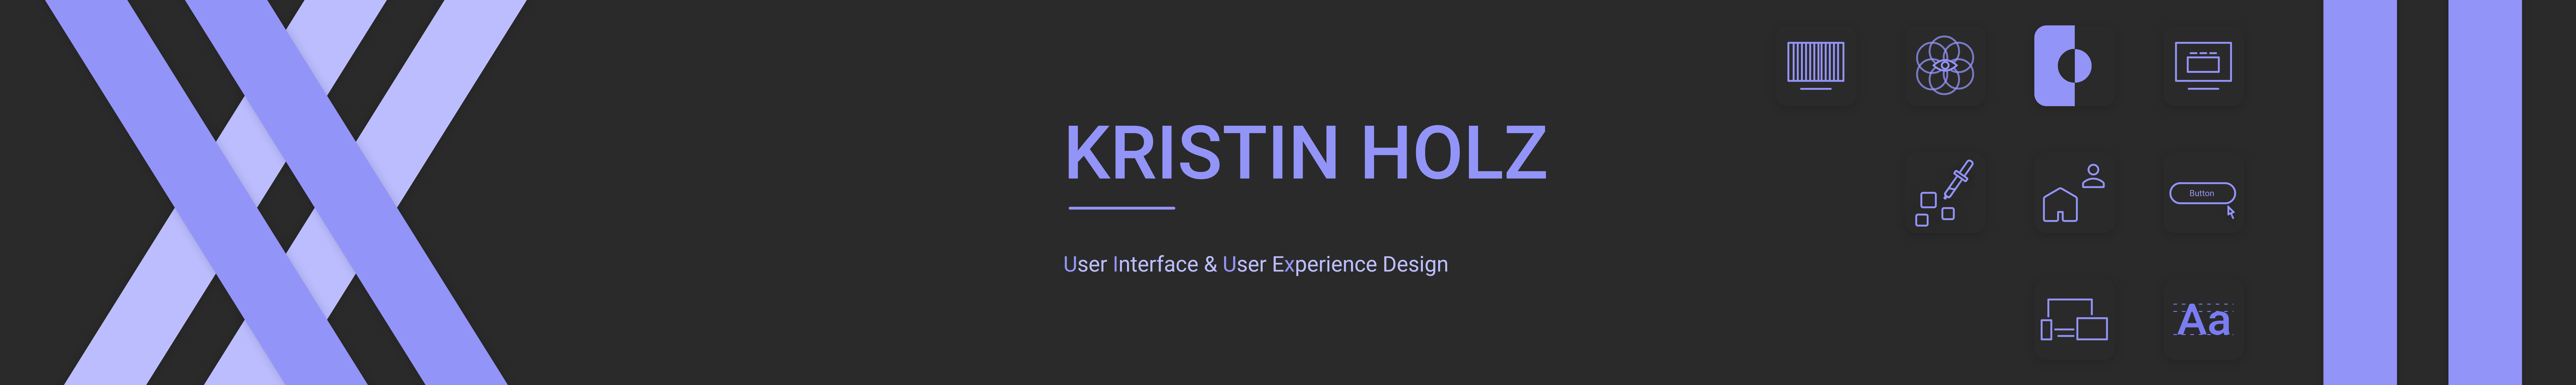 Kristin Holz's profile banner